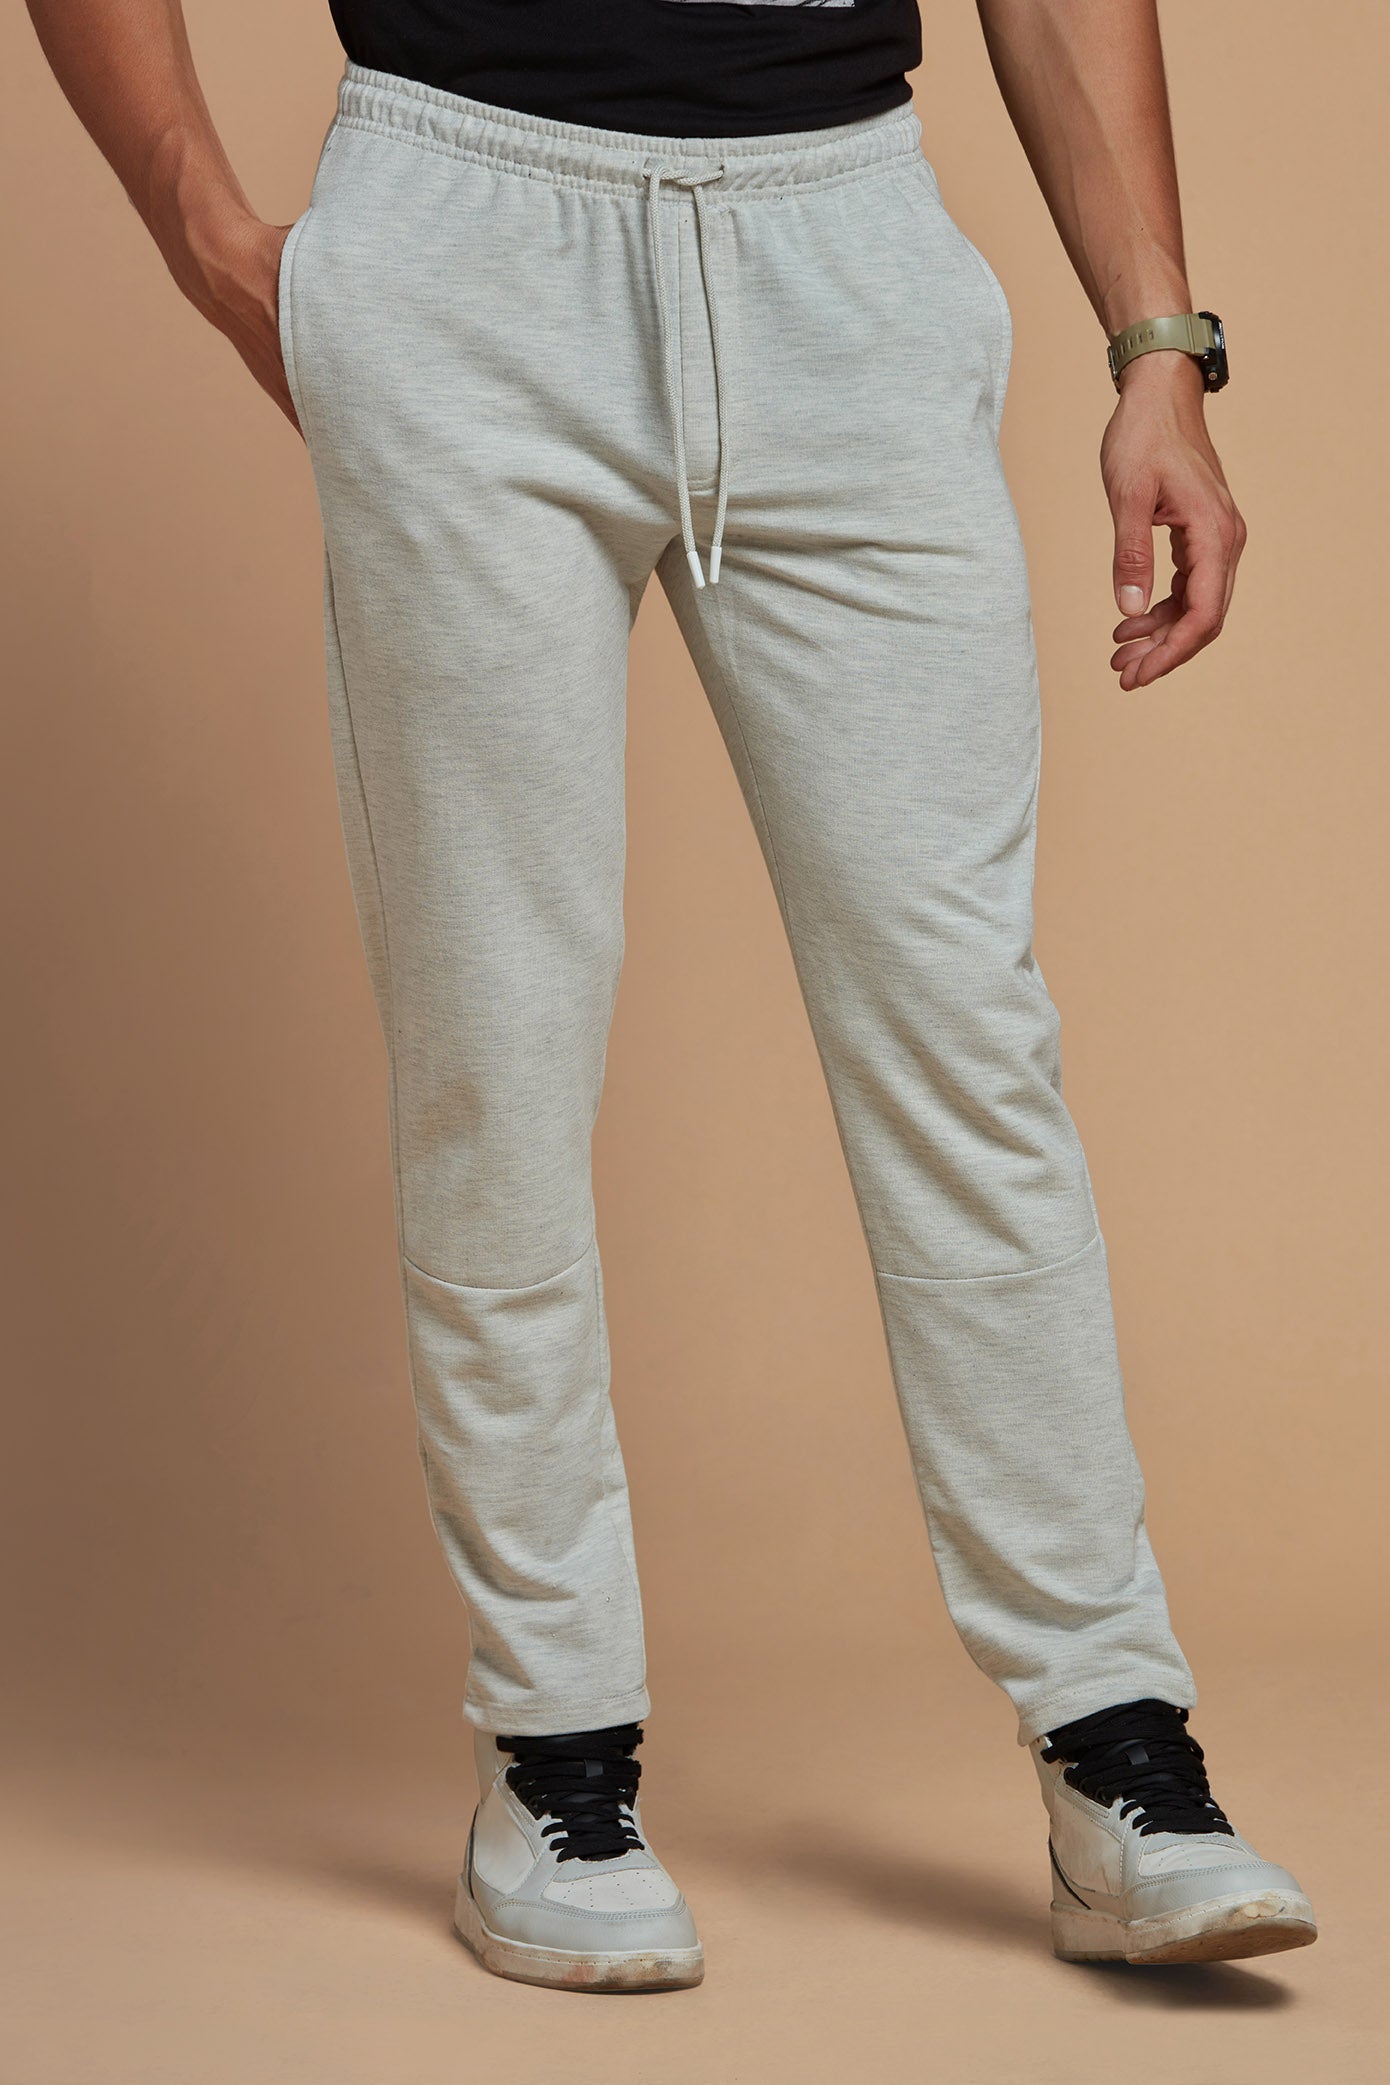 Ajile Men Solid Slim Fit White Track Pants - Selling Fast at Pantaloons.com